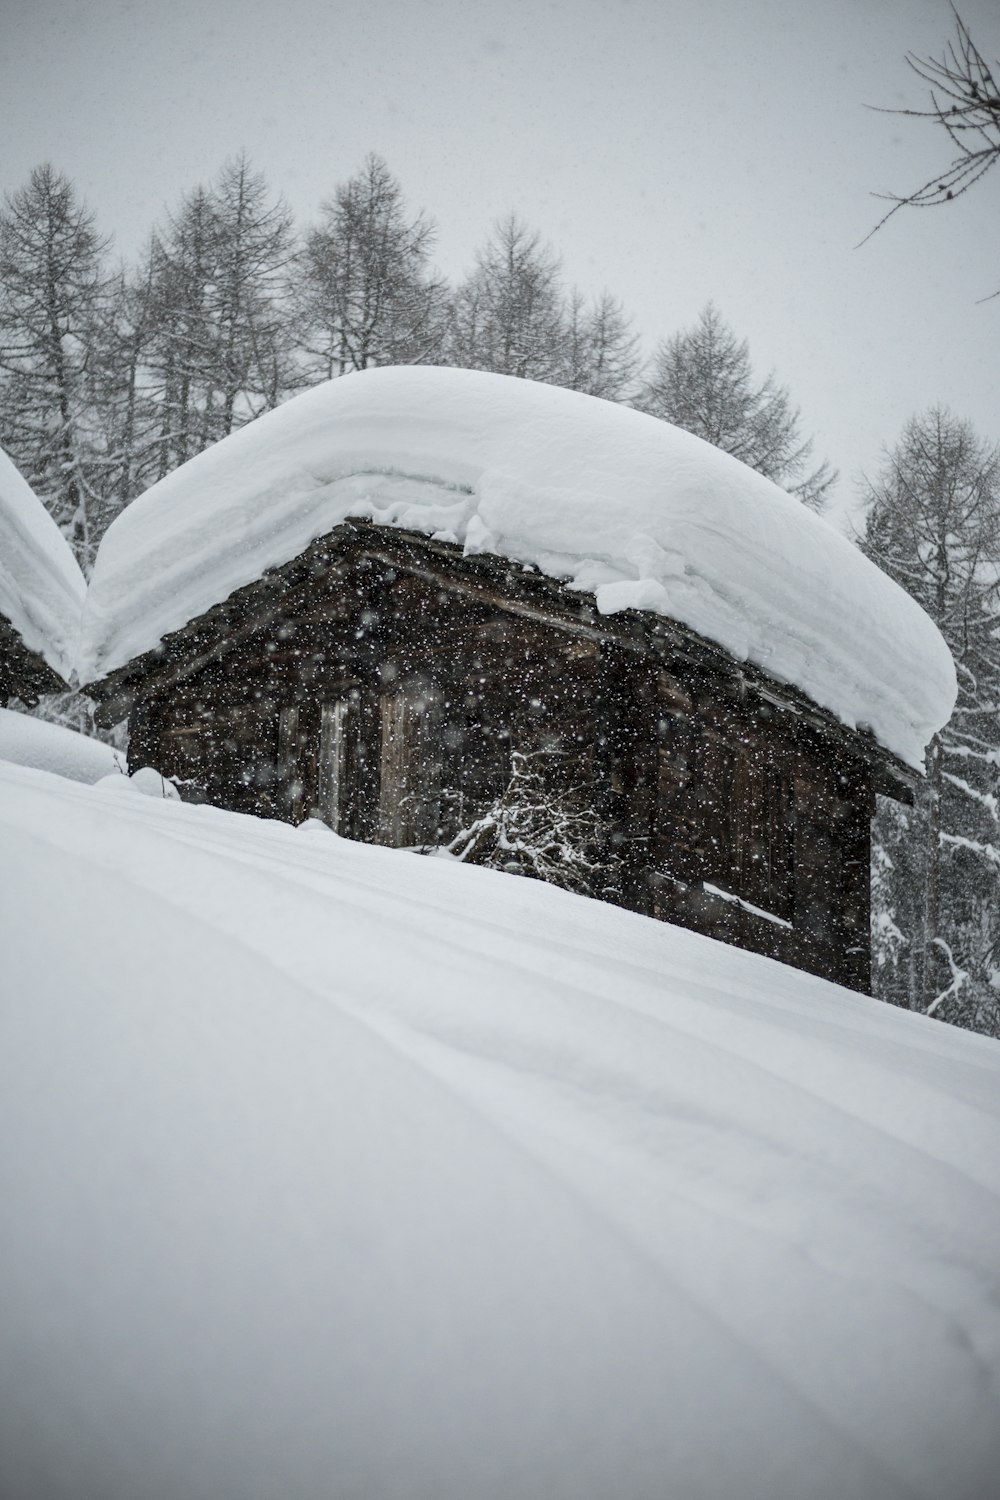 photo of snow coated house near trees